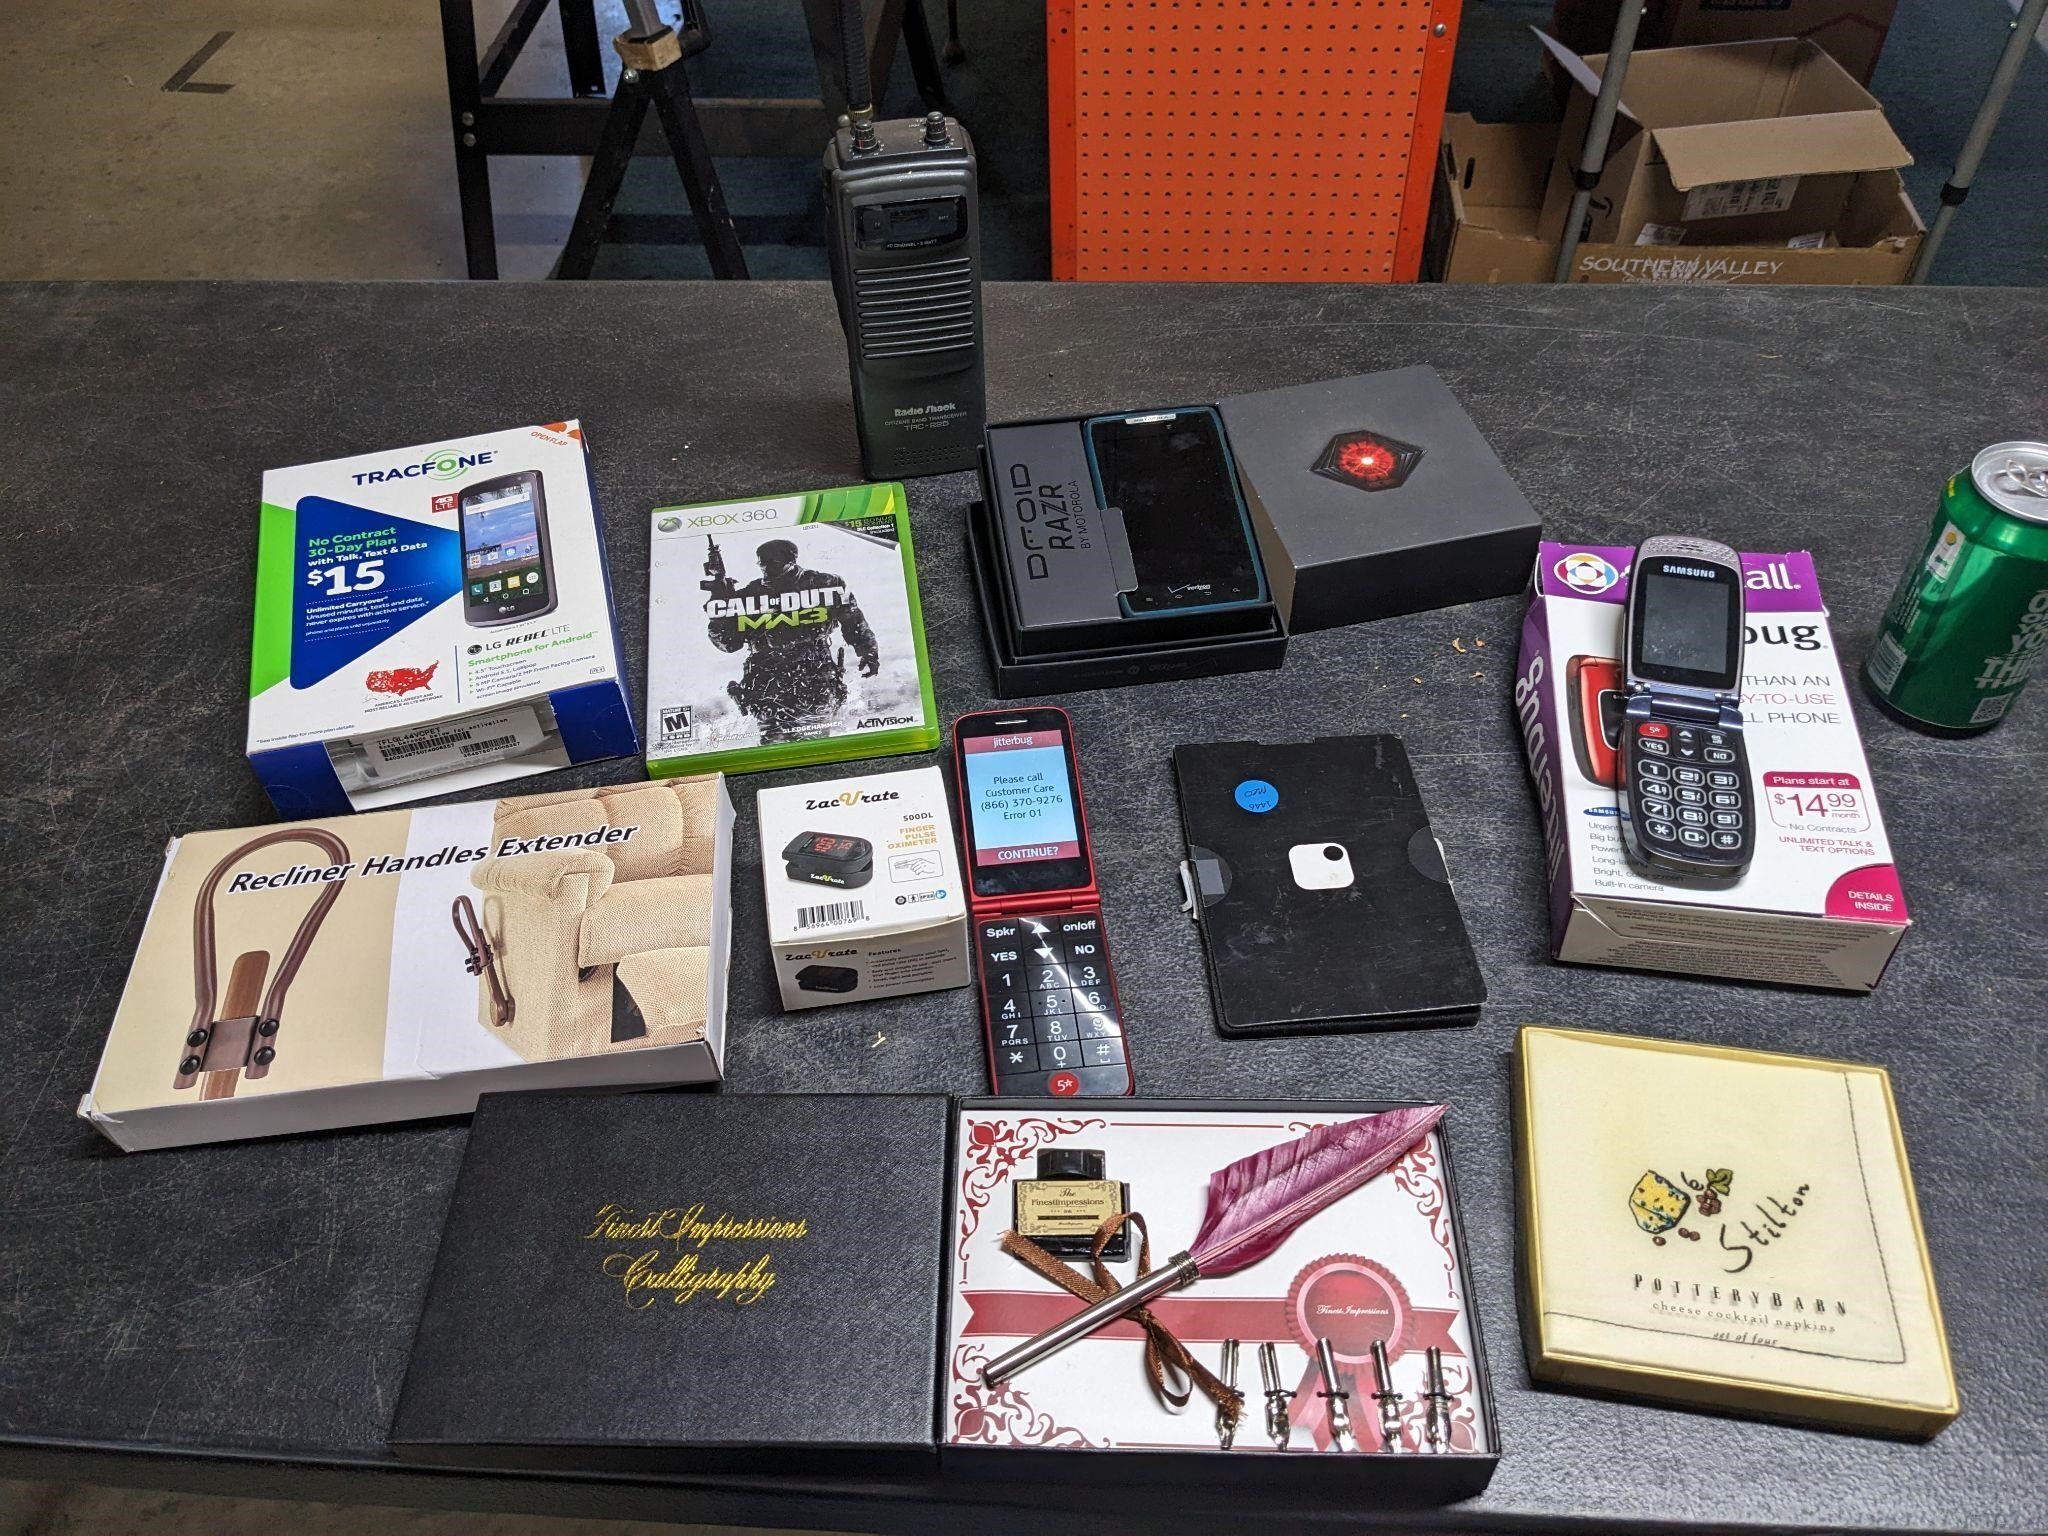 Cell Phones, COD MW3, Calligraphy Set, etc.